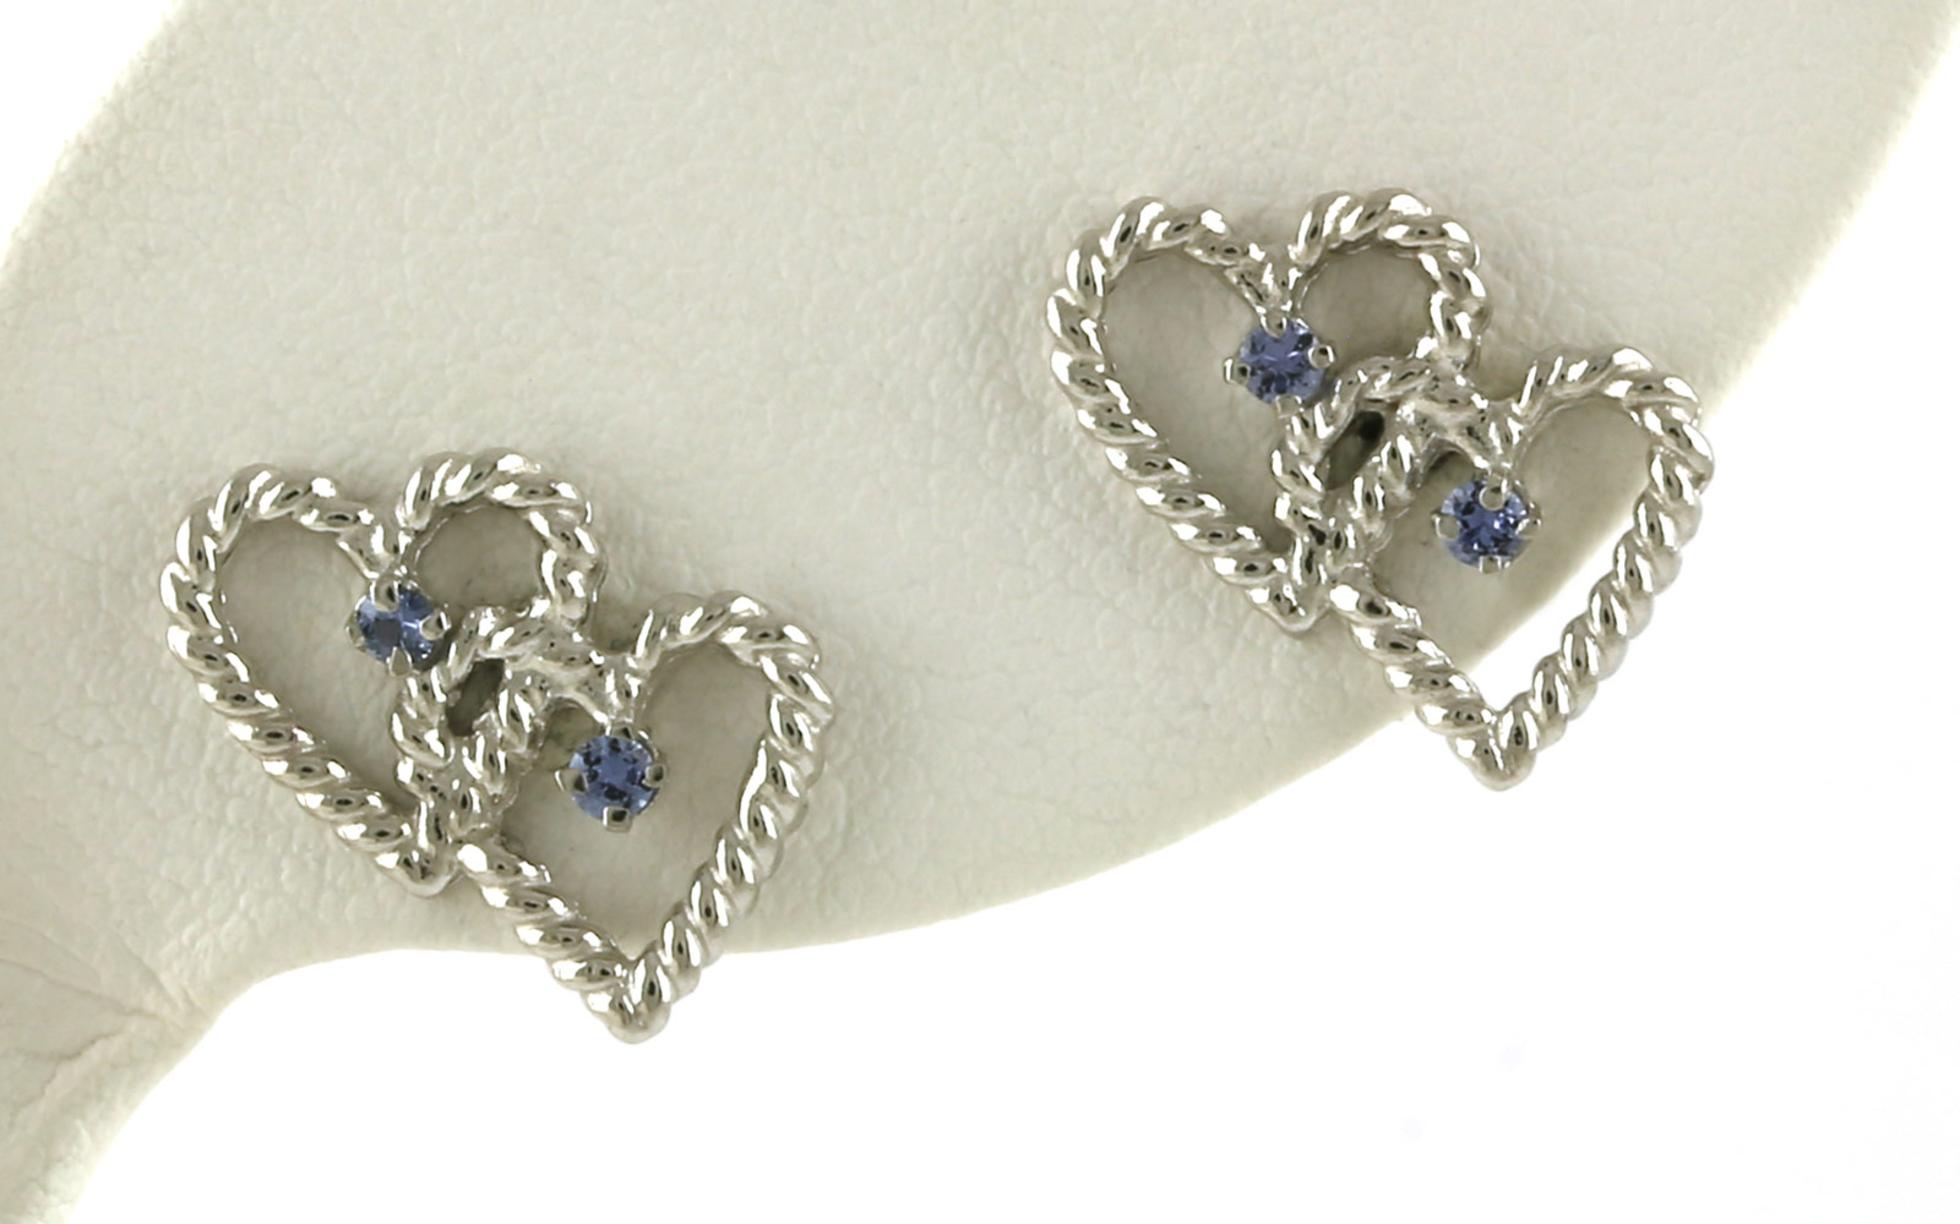 Double Heart Montana Yogo Sapphires Stud Earrings in Sterling Silver